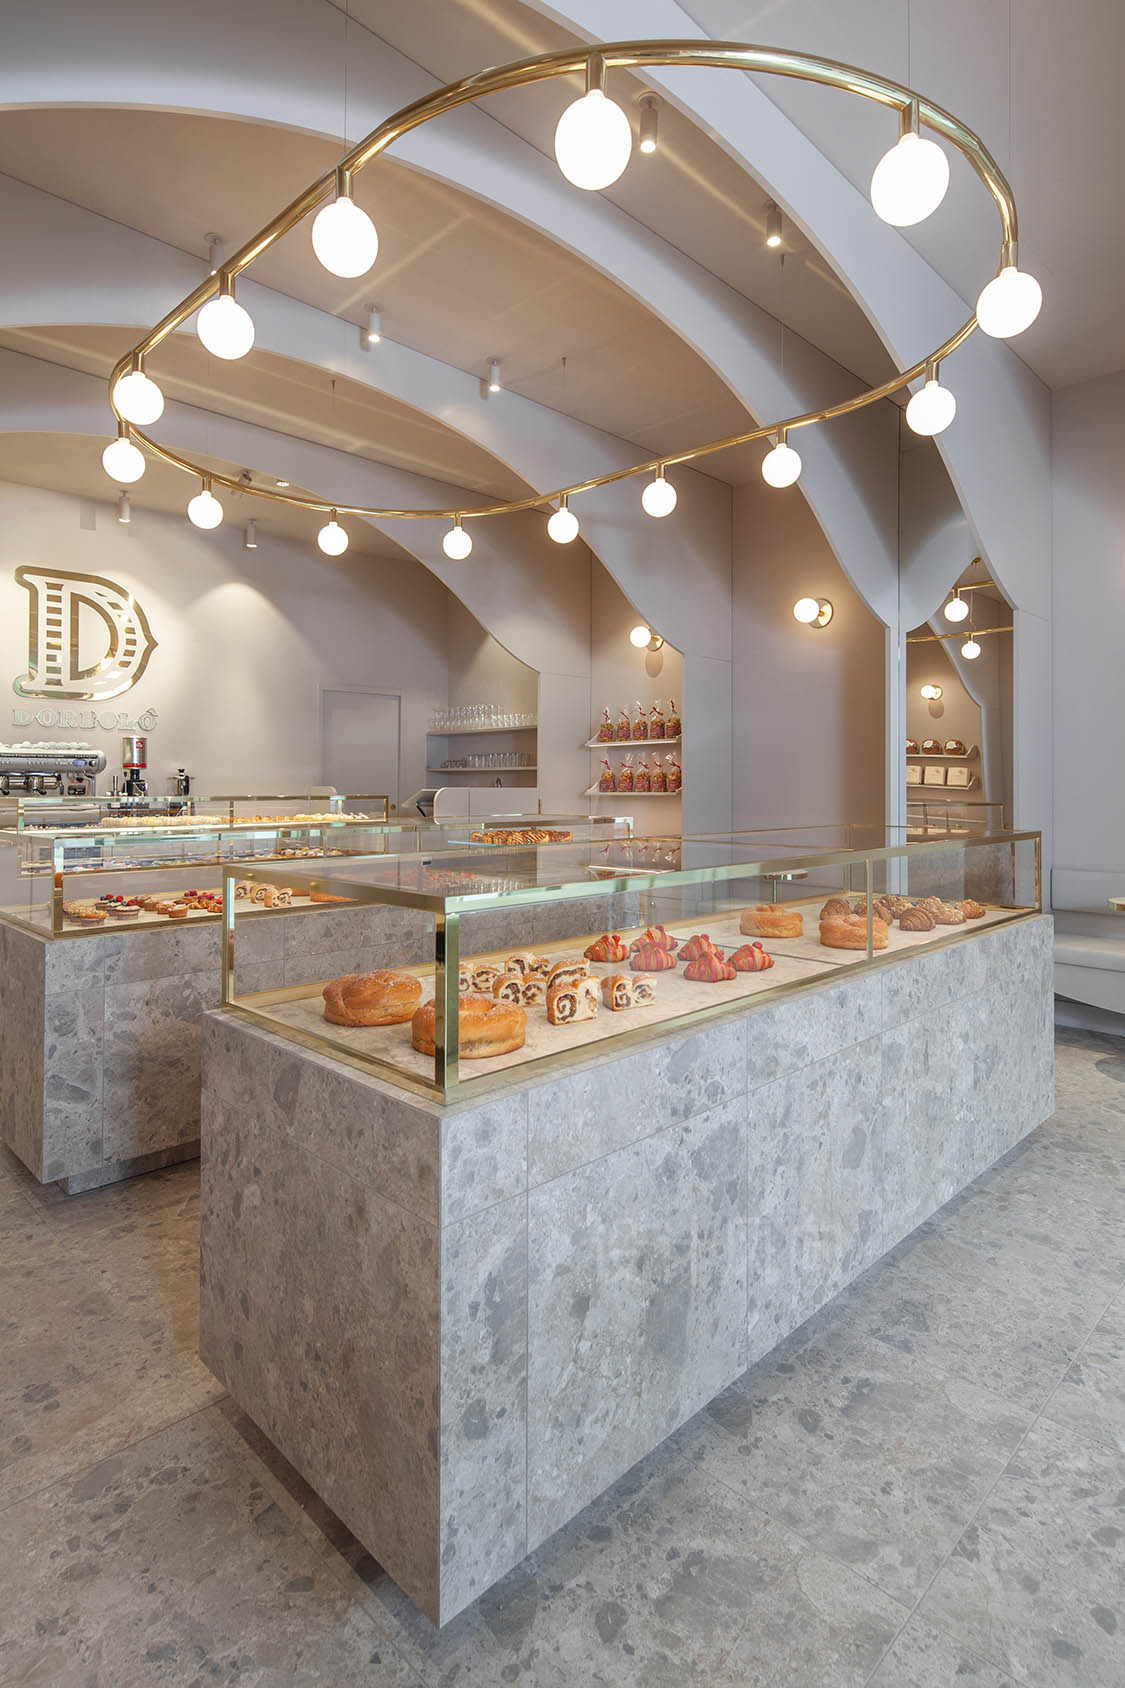 Visual Display Srl,面包店设计,Dorbolò La Gubana面包店,意大利设计,面包店设计案例,烘焙店设计,国外面包店设计案例